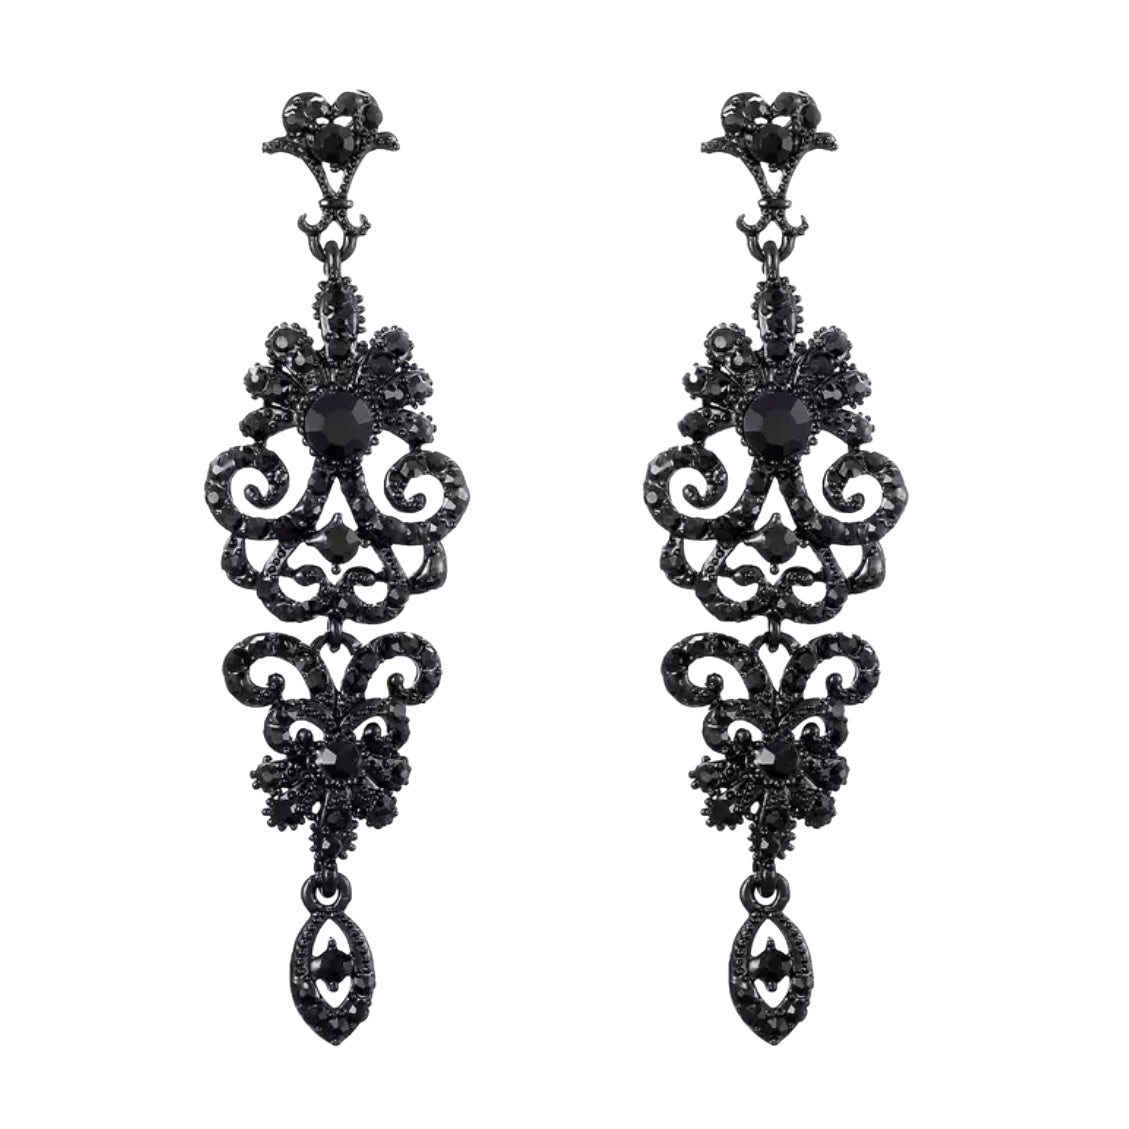 Great Gatsby 1920's Crystal Rhinestone Drop Earrings - Black (Style 9)